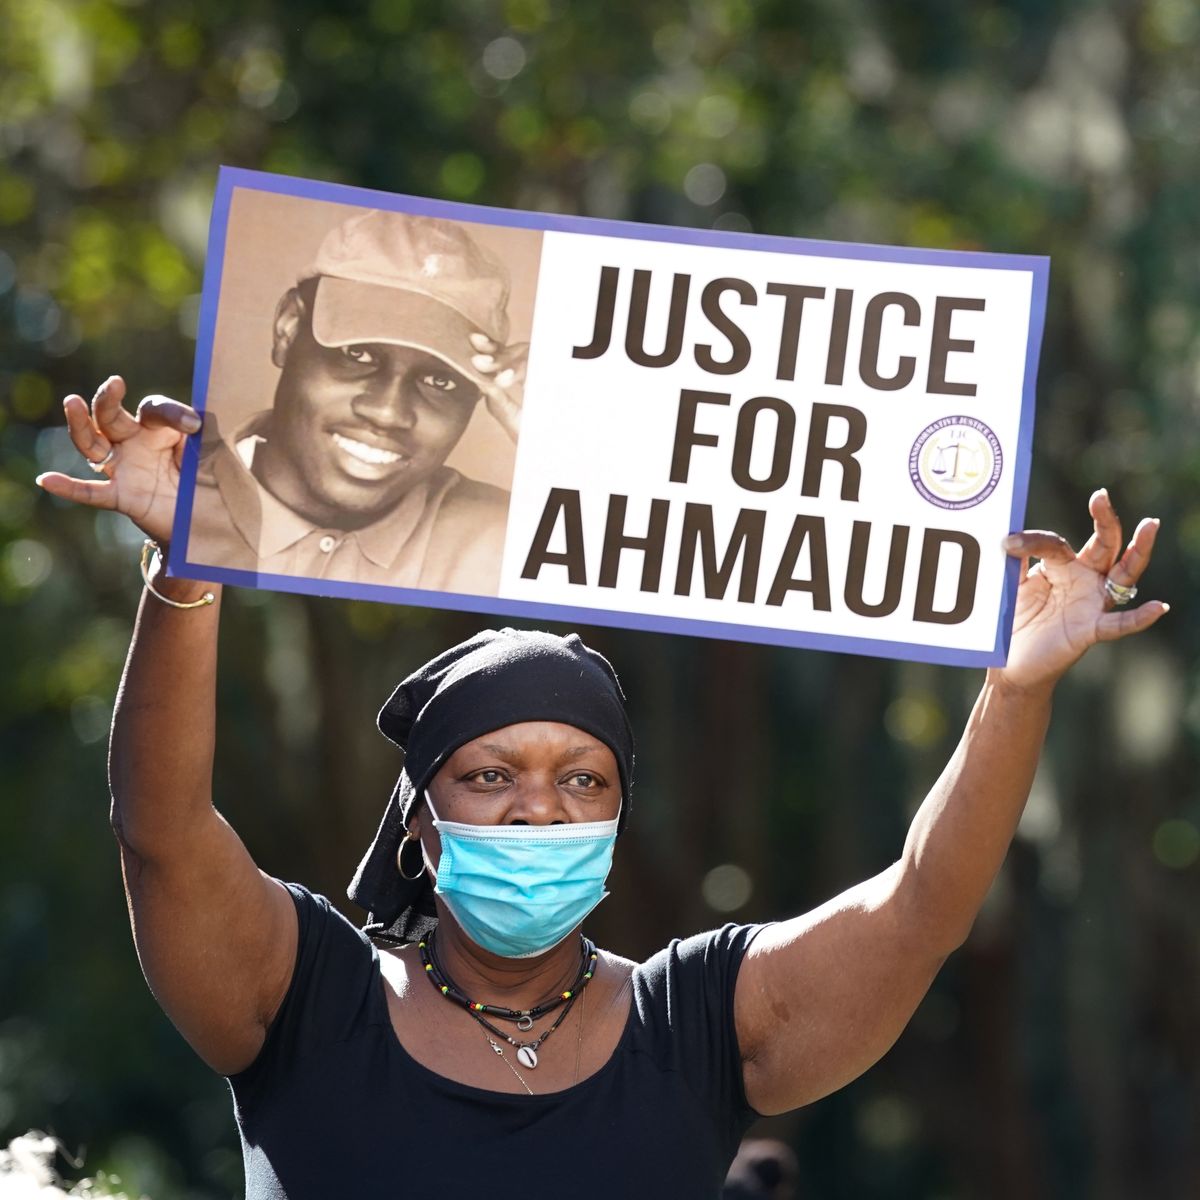 ahmaud arbery murder trial